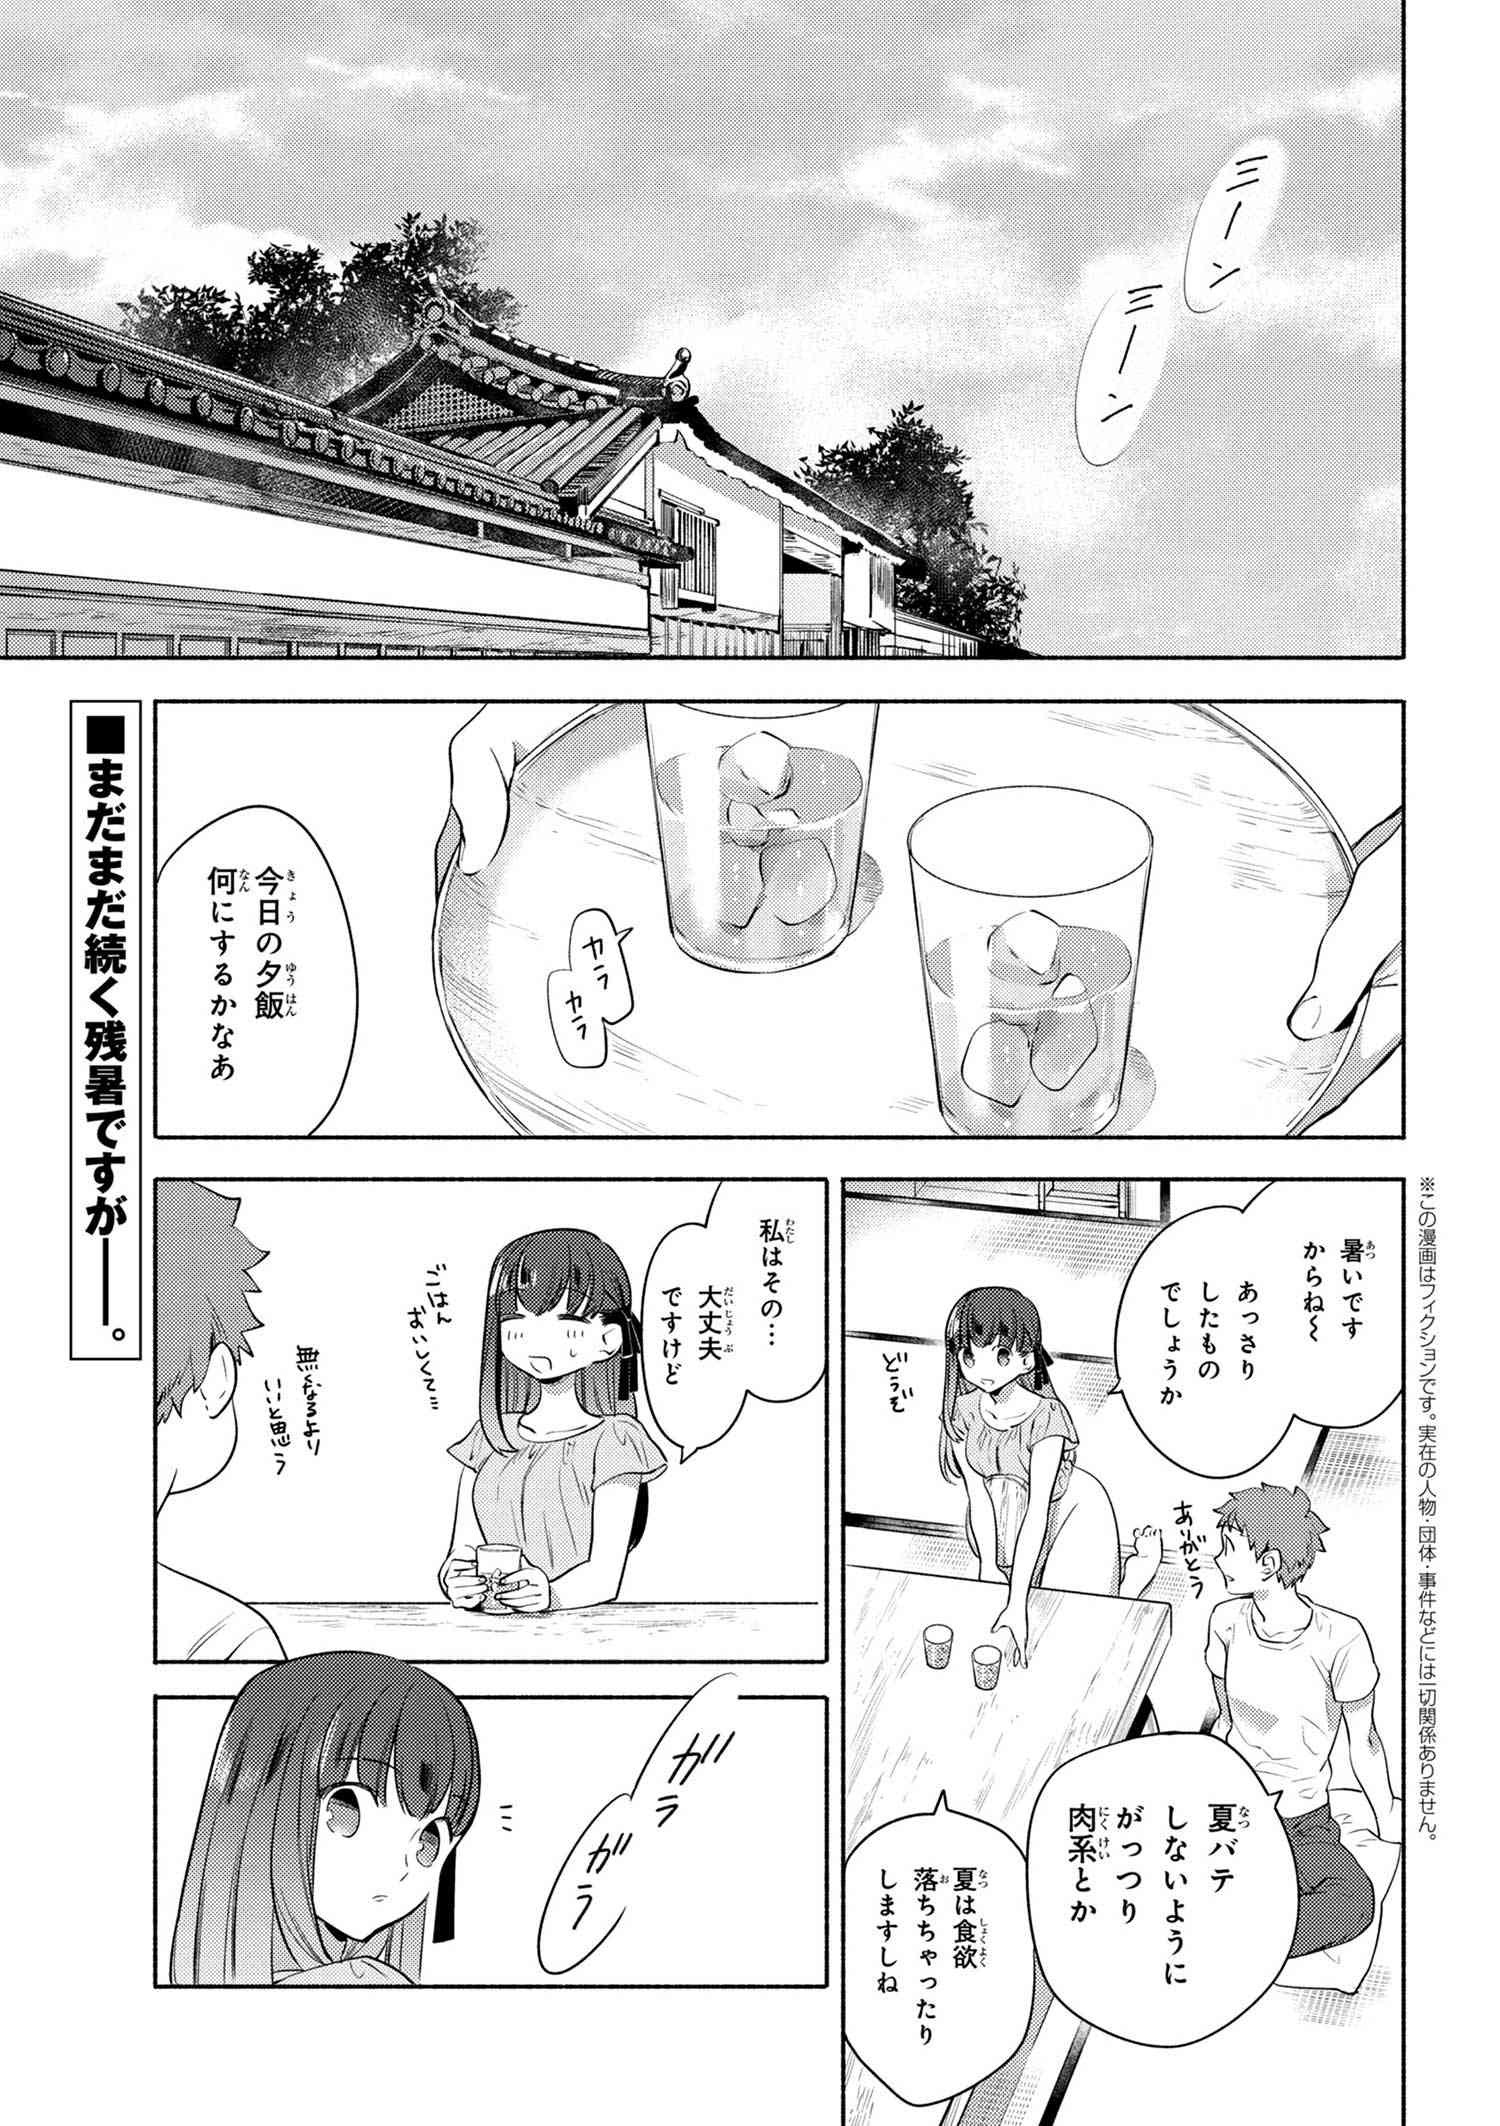 Emiya-san Chi no Kyou no Gohan - Chapter 17 - Page 1